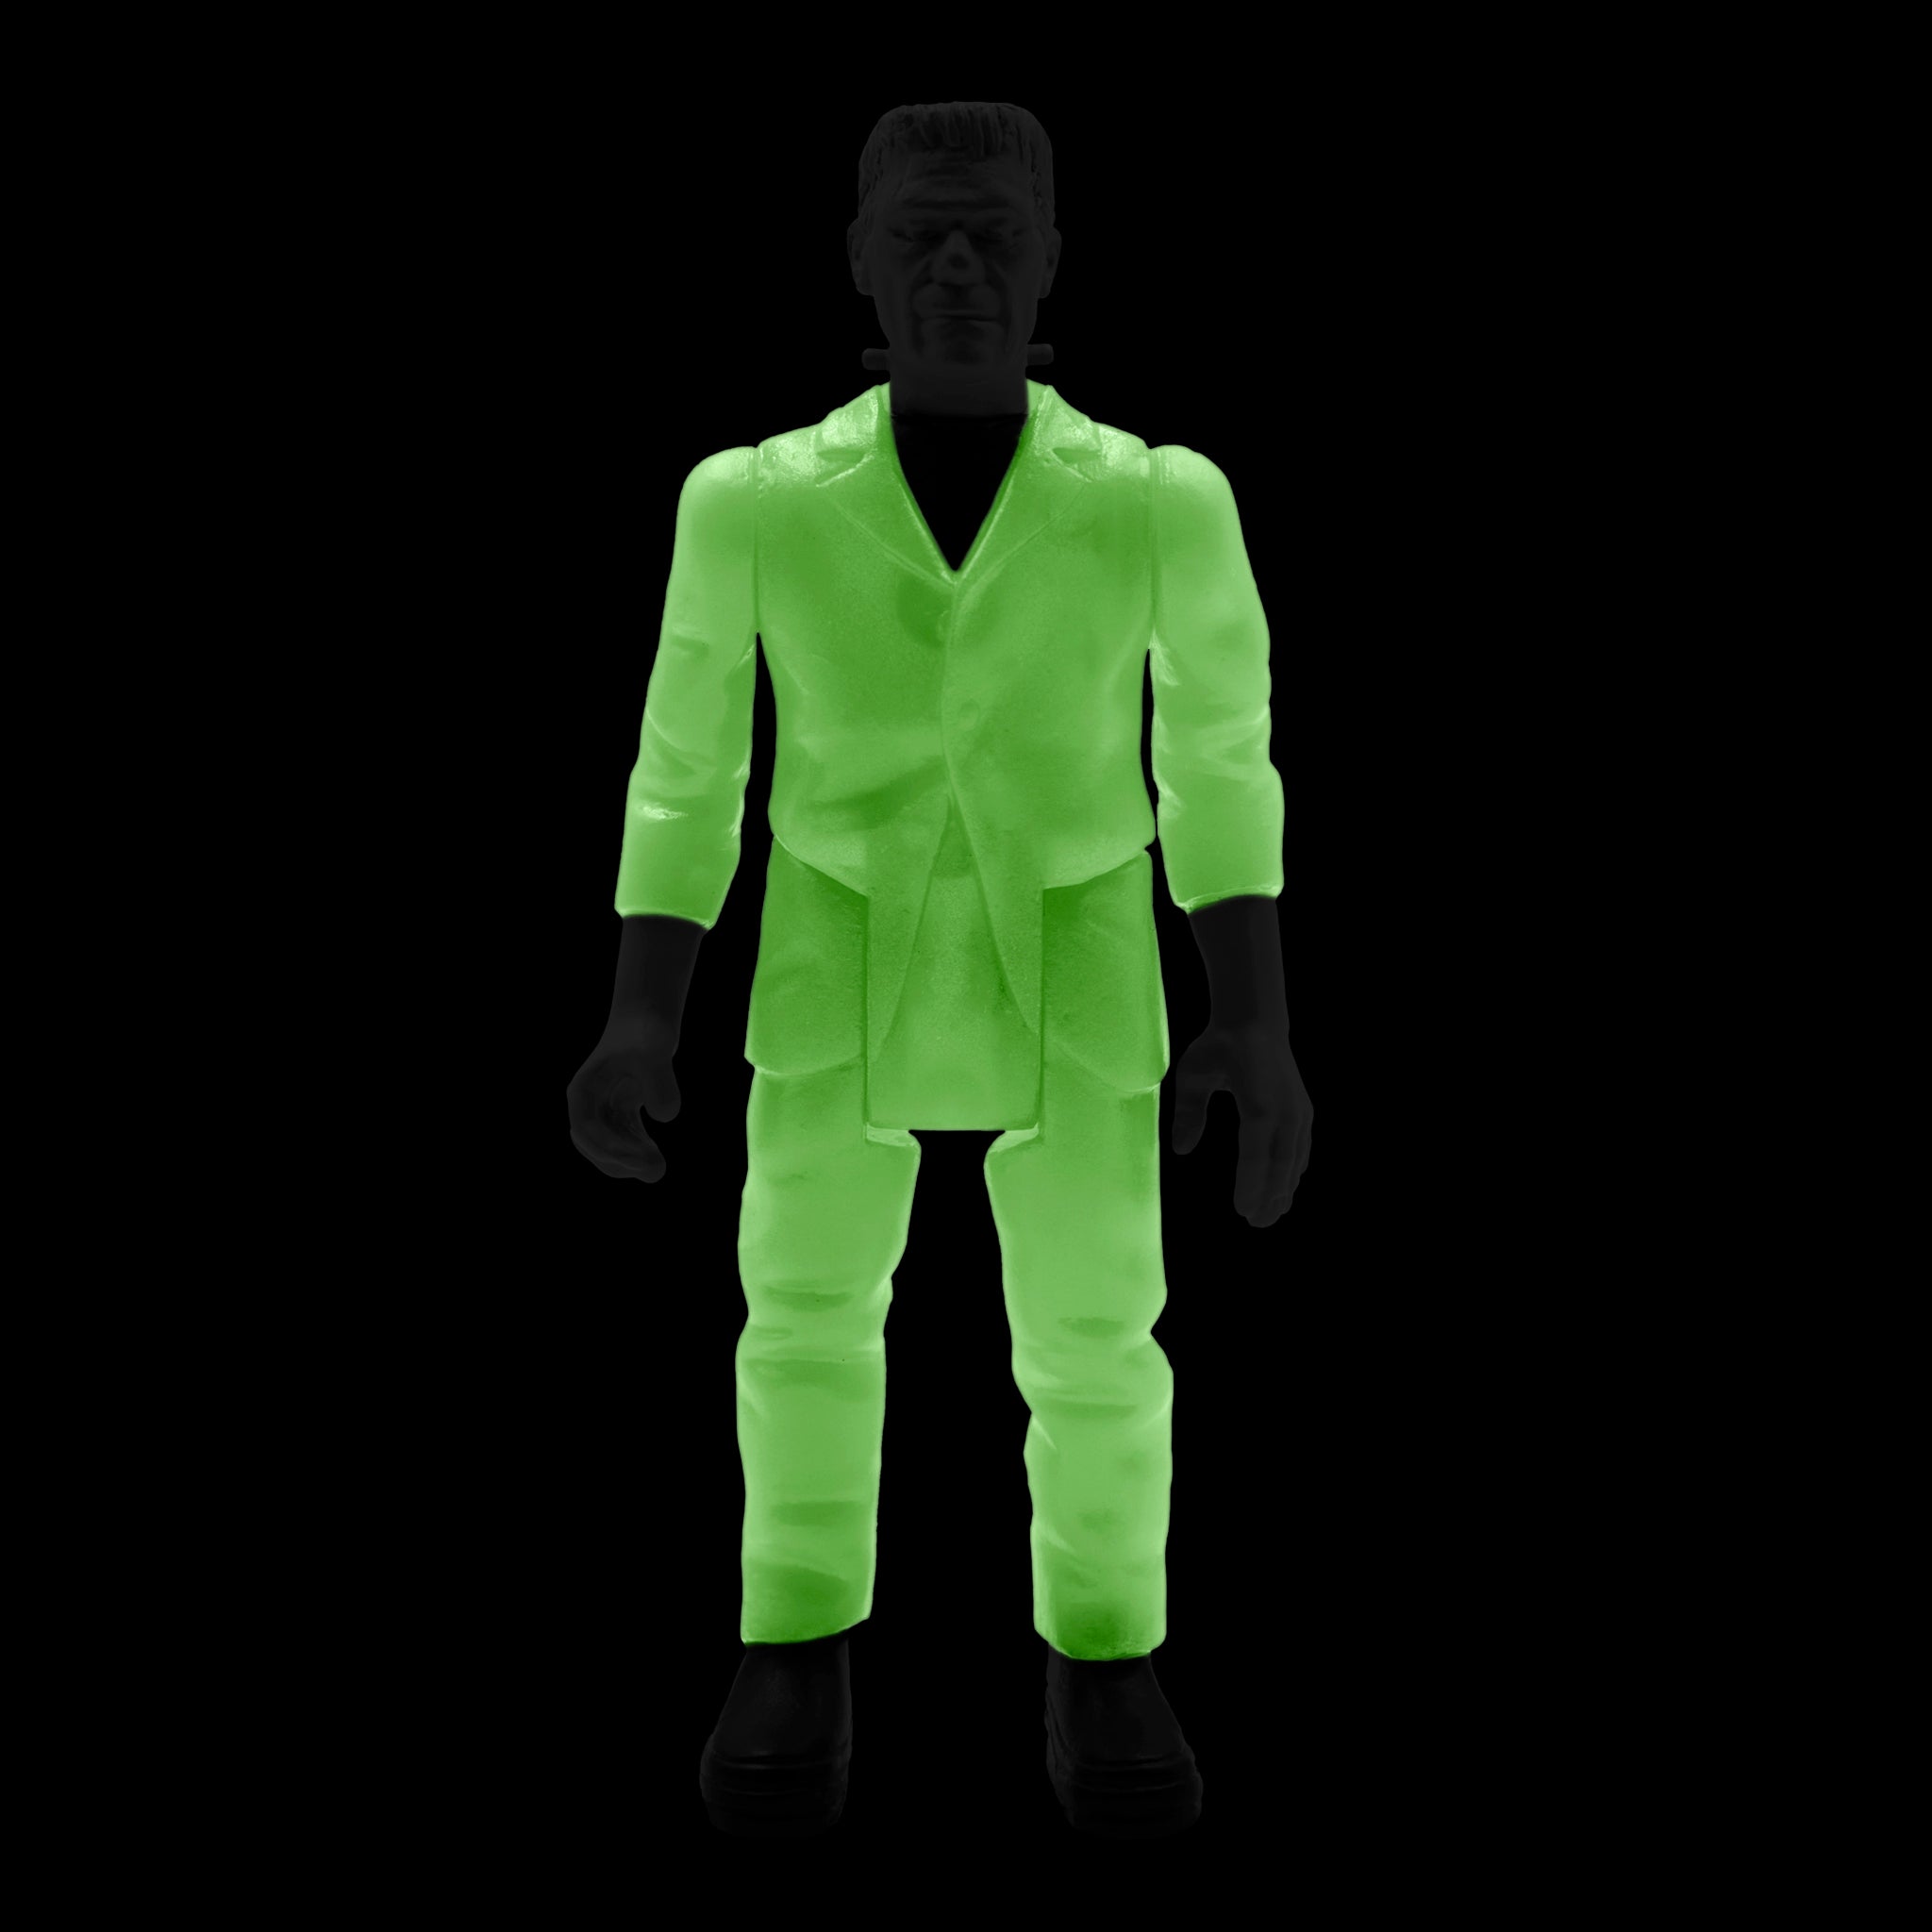 Universal Monsters ReAction Figure - Frankenstein (Glow-In-The-Dark Costume Colors)